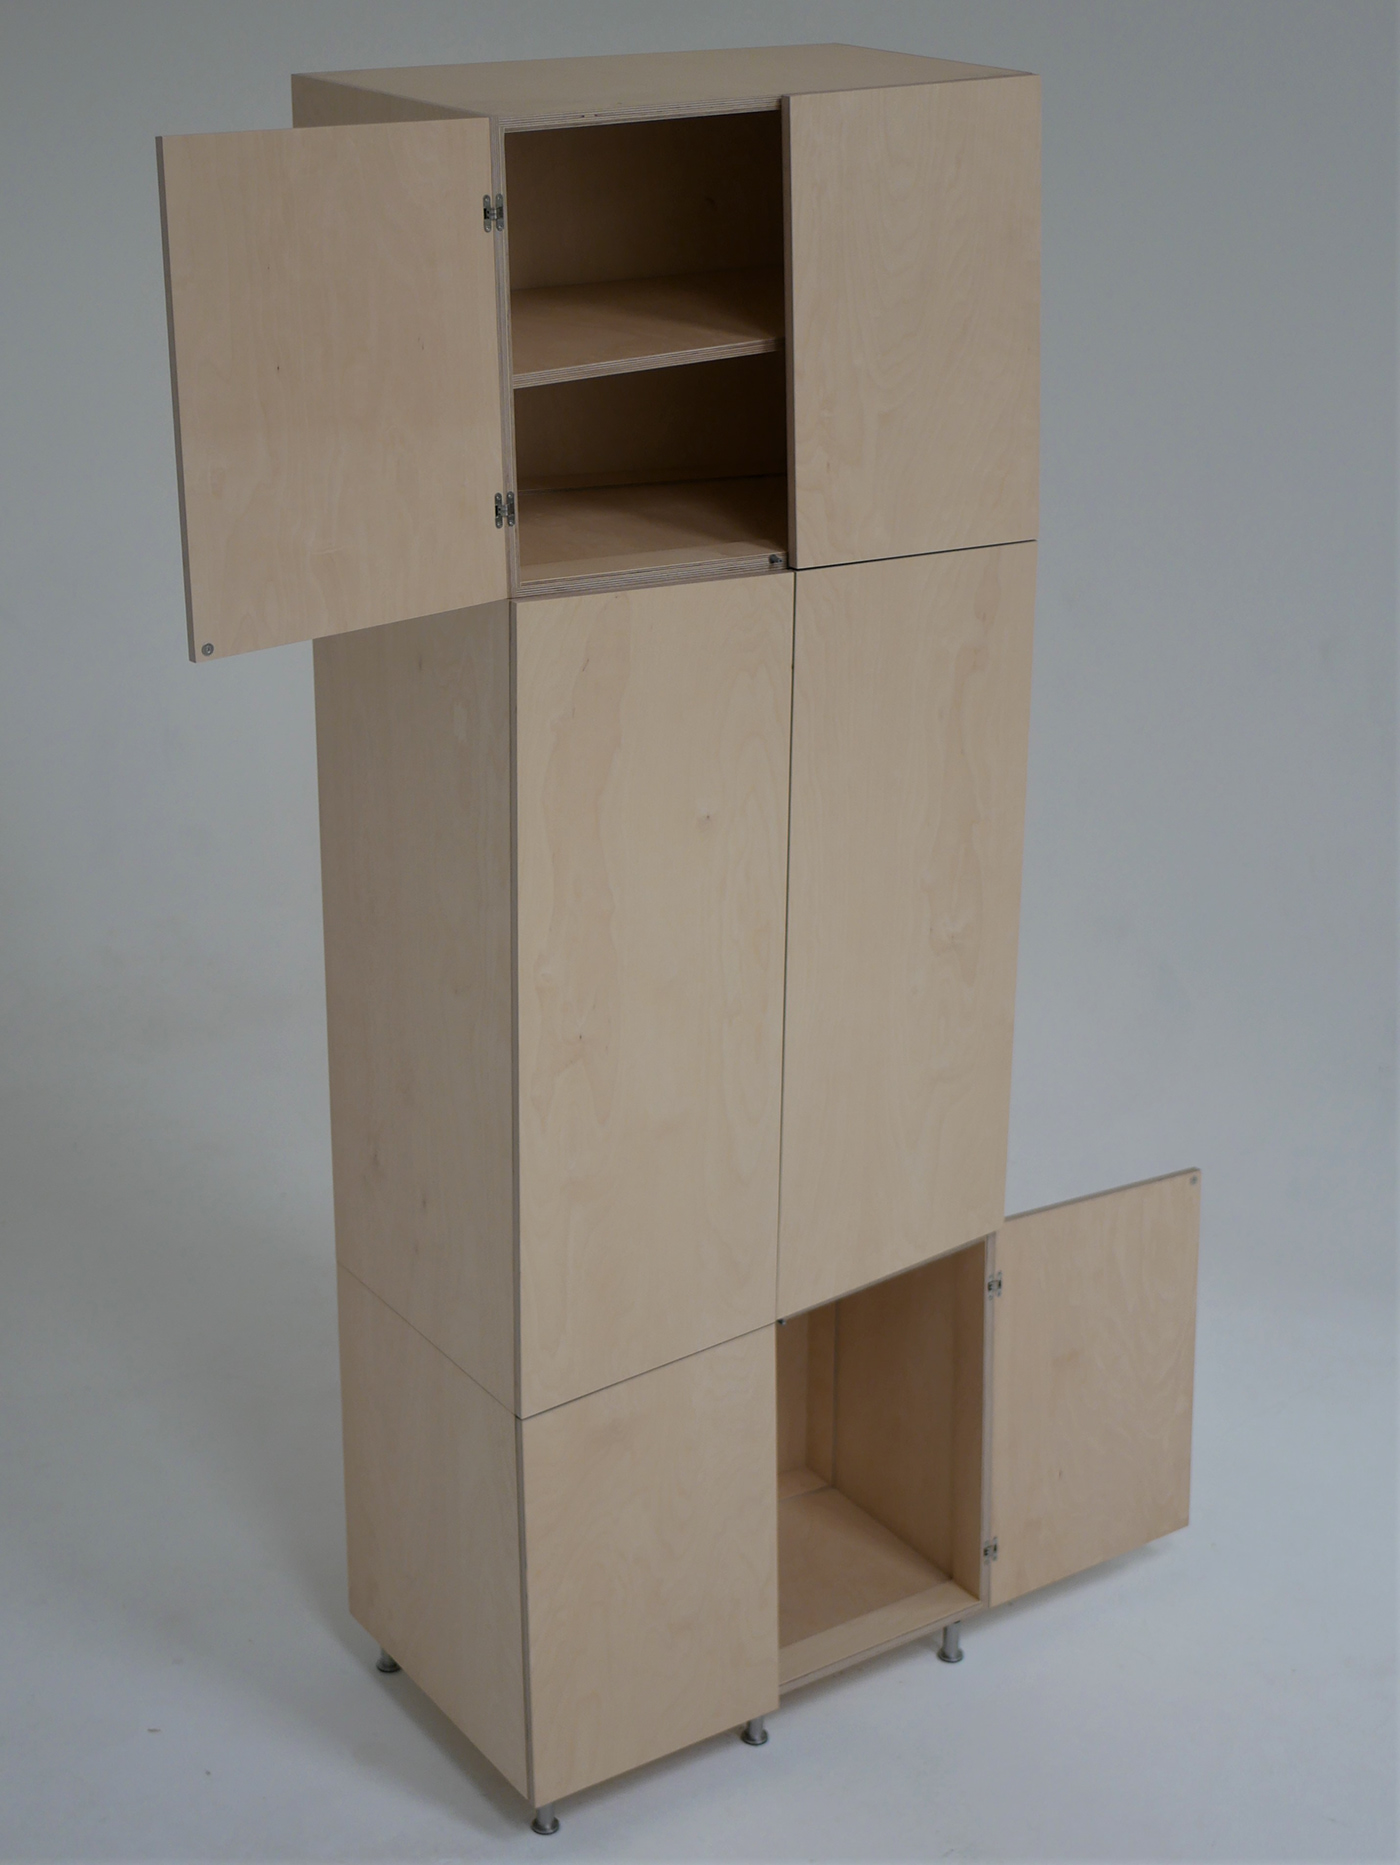 birch Ply wardrobe cupboard Angles modular industrial product furniture design